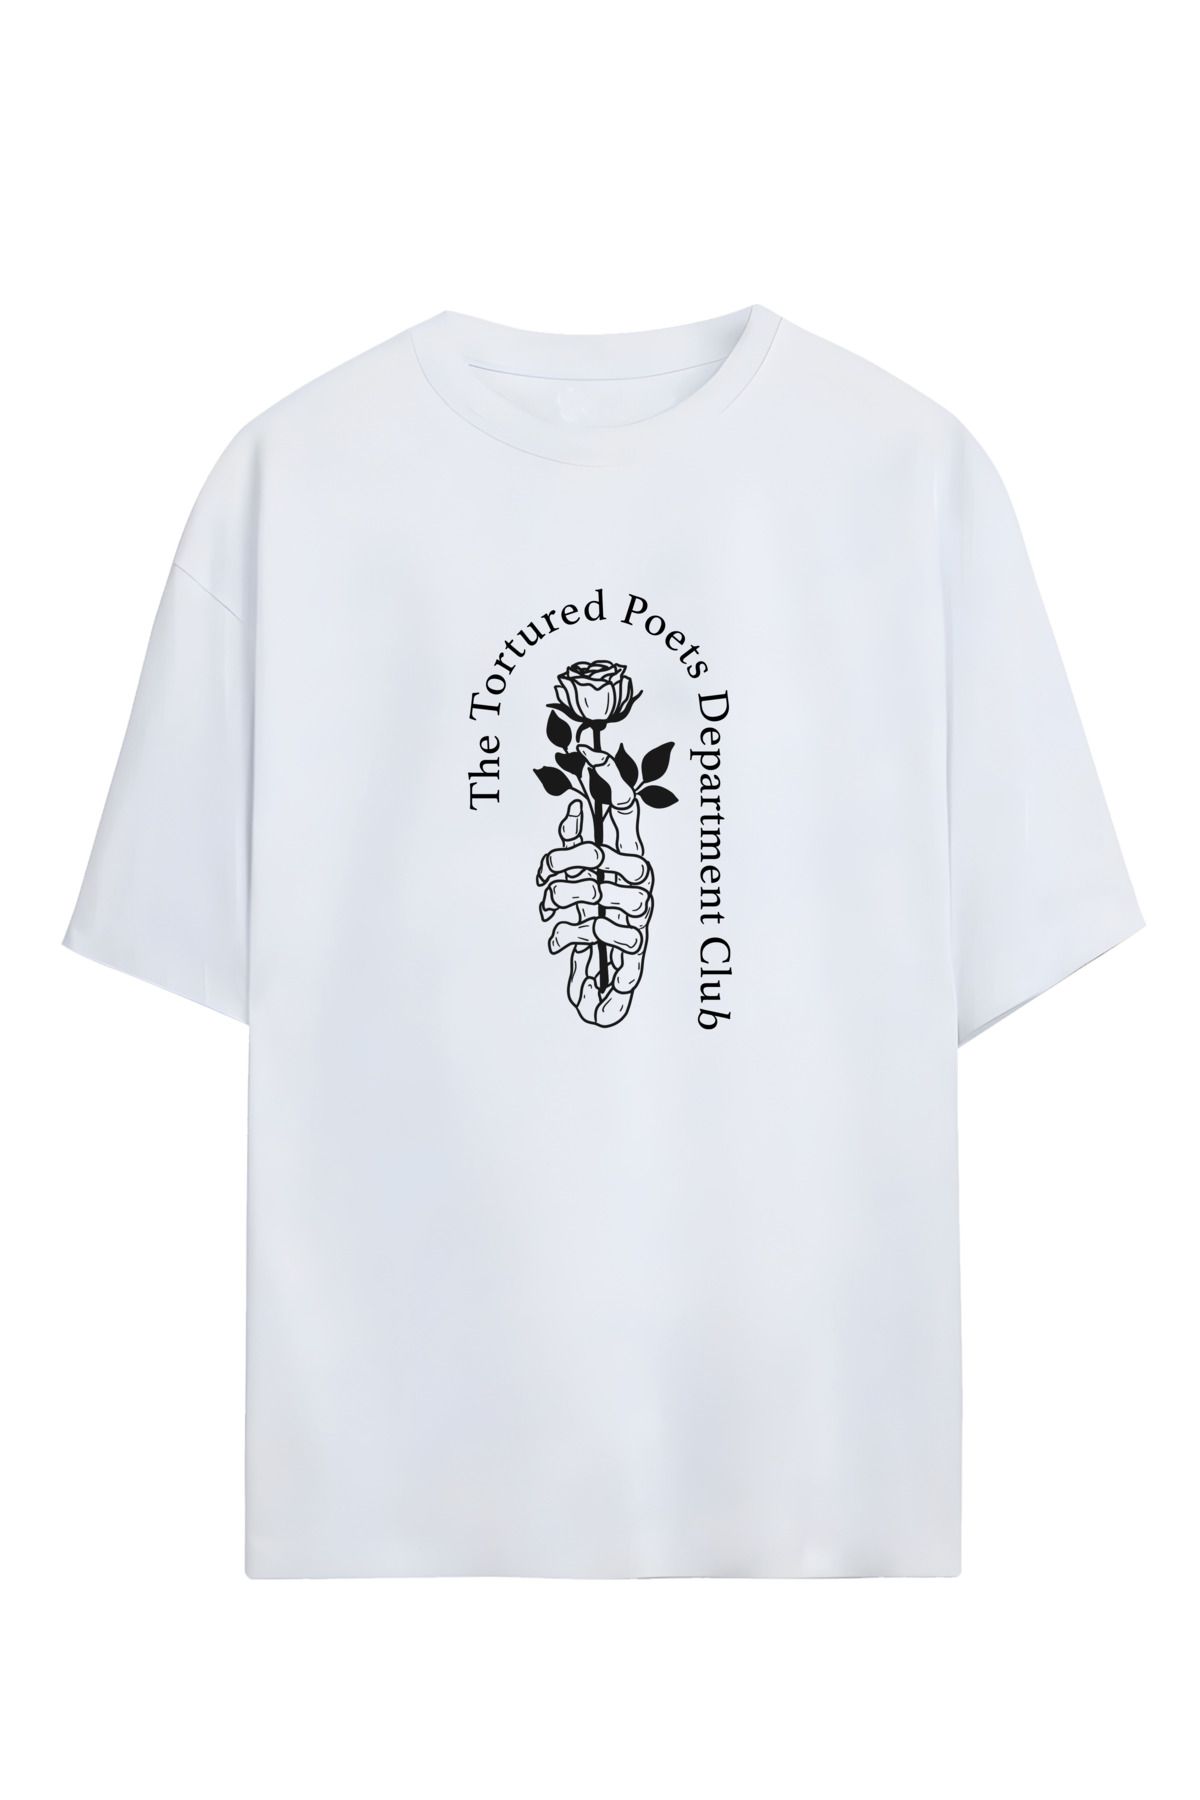 Adrift Taylor Swift - THE TORTURED POETS DEPARTMENT Tasarımlı Oversize T-shirt